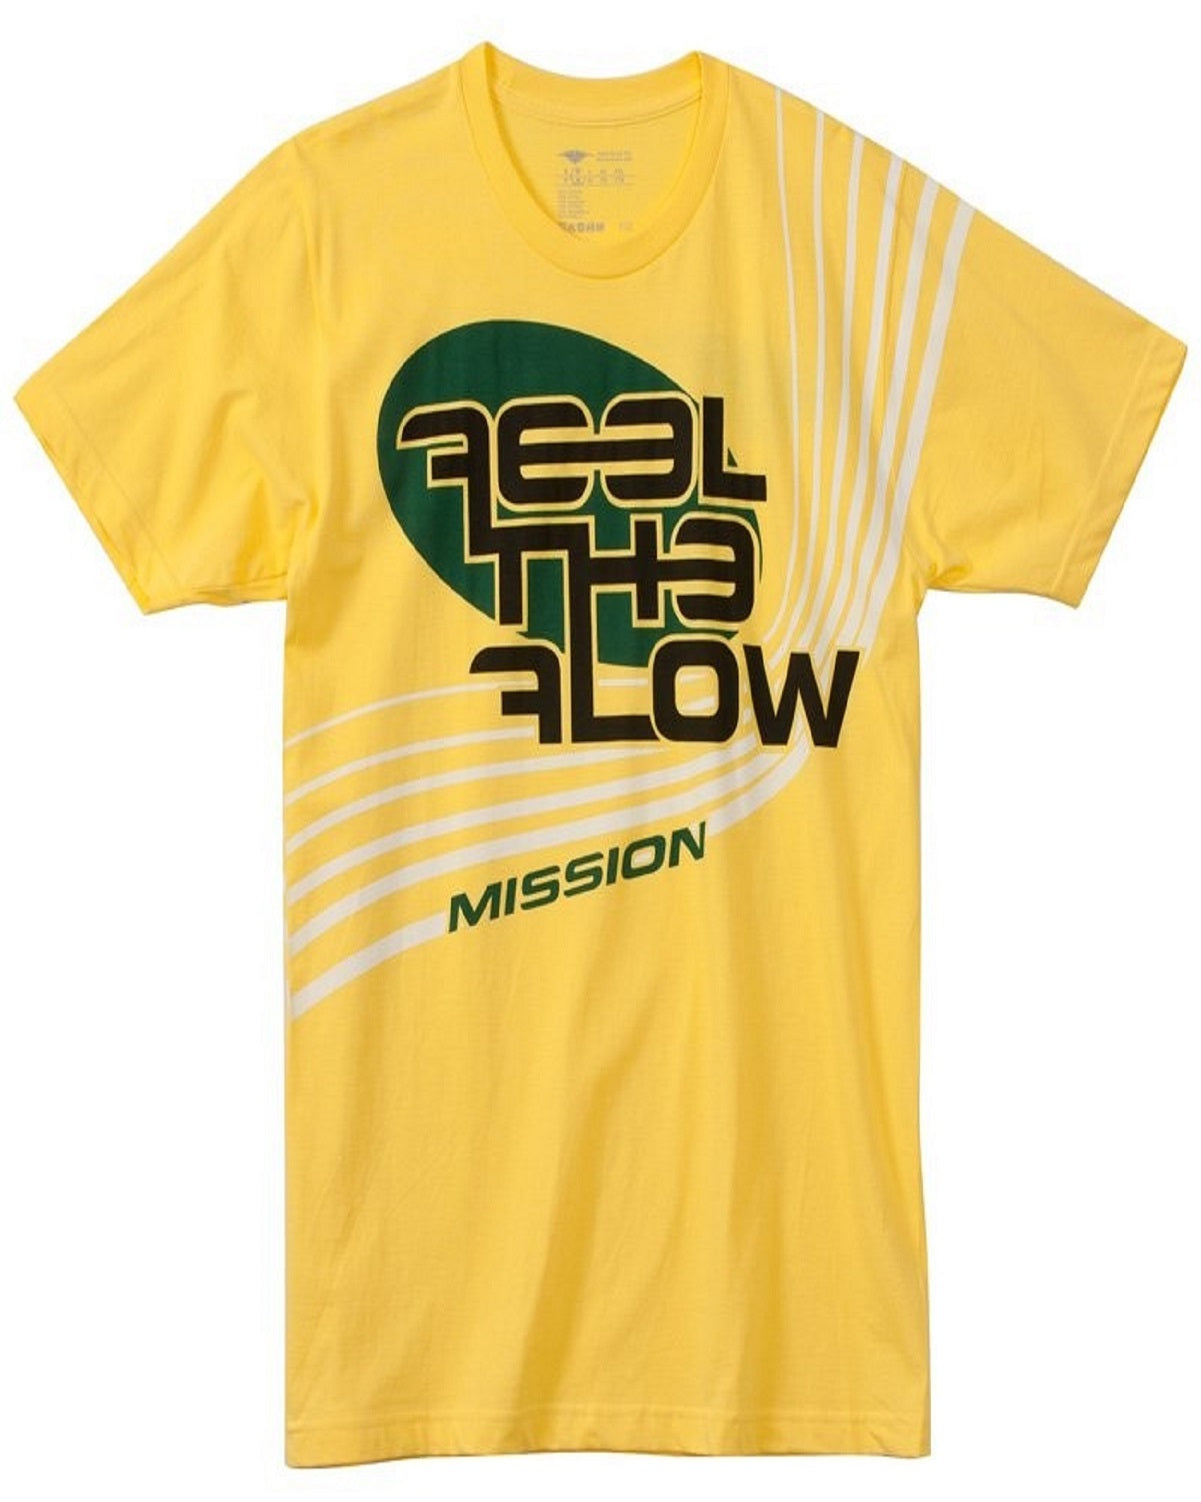 Mission Feel the Flow Senior Short Sleeve Tee Shirt, Medium